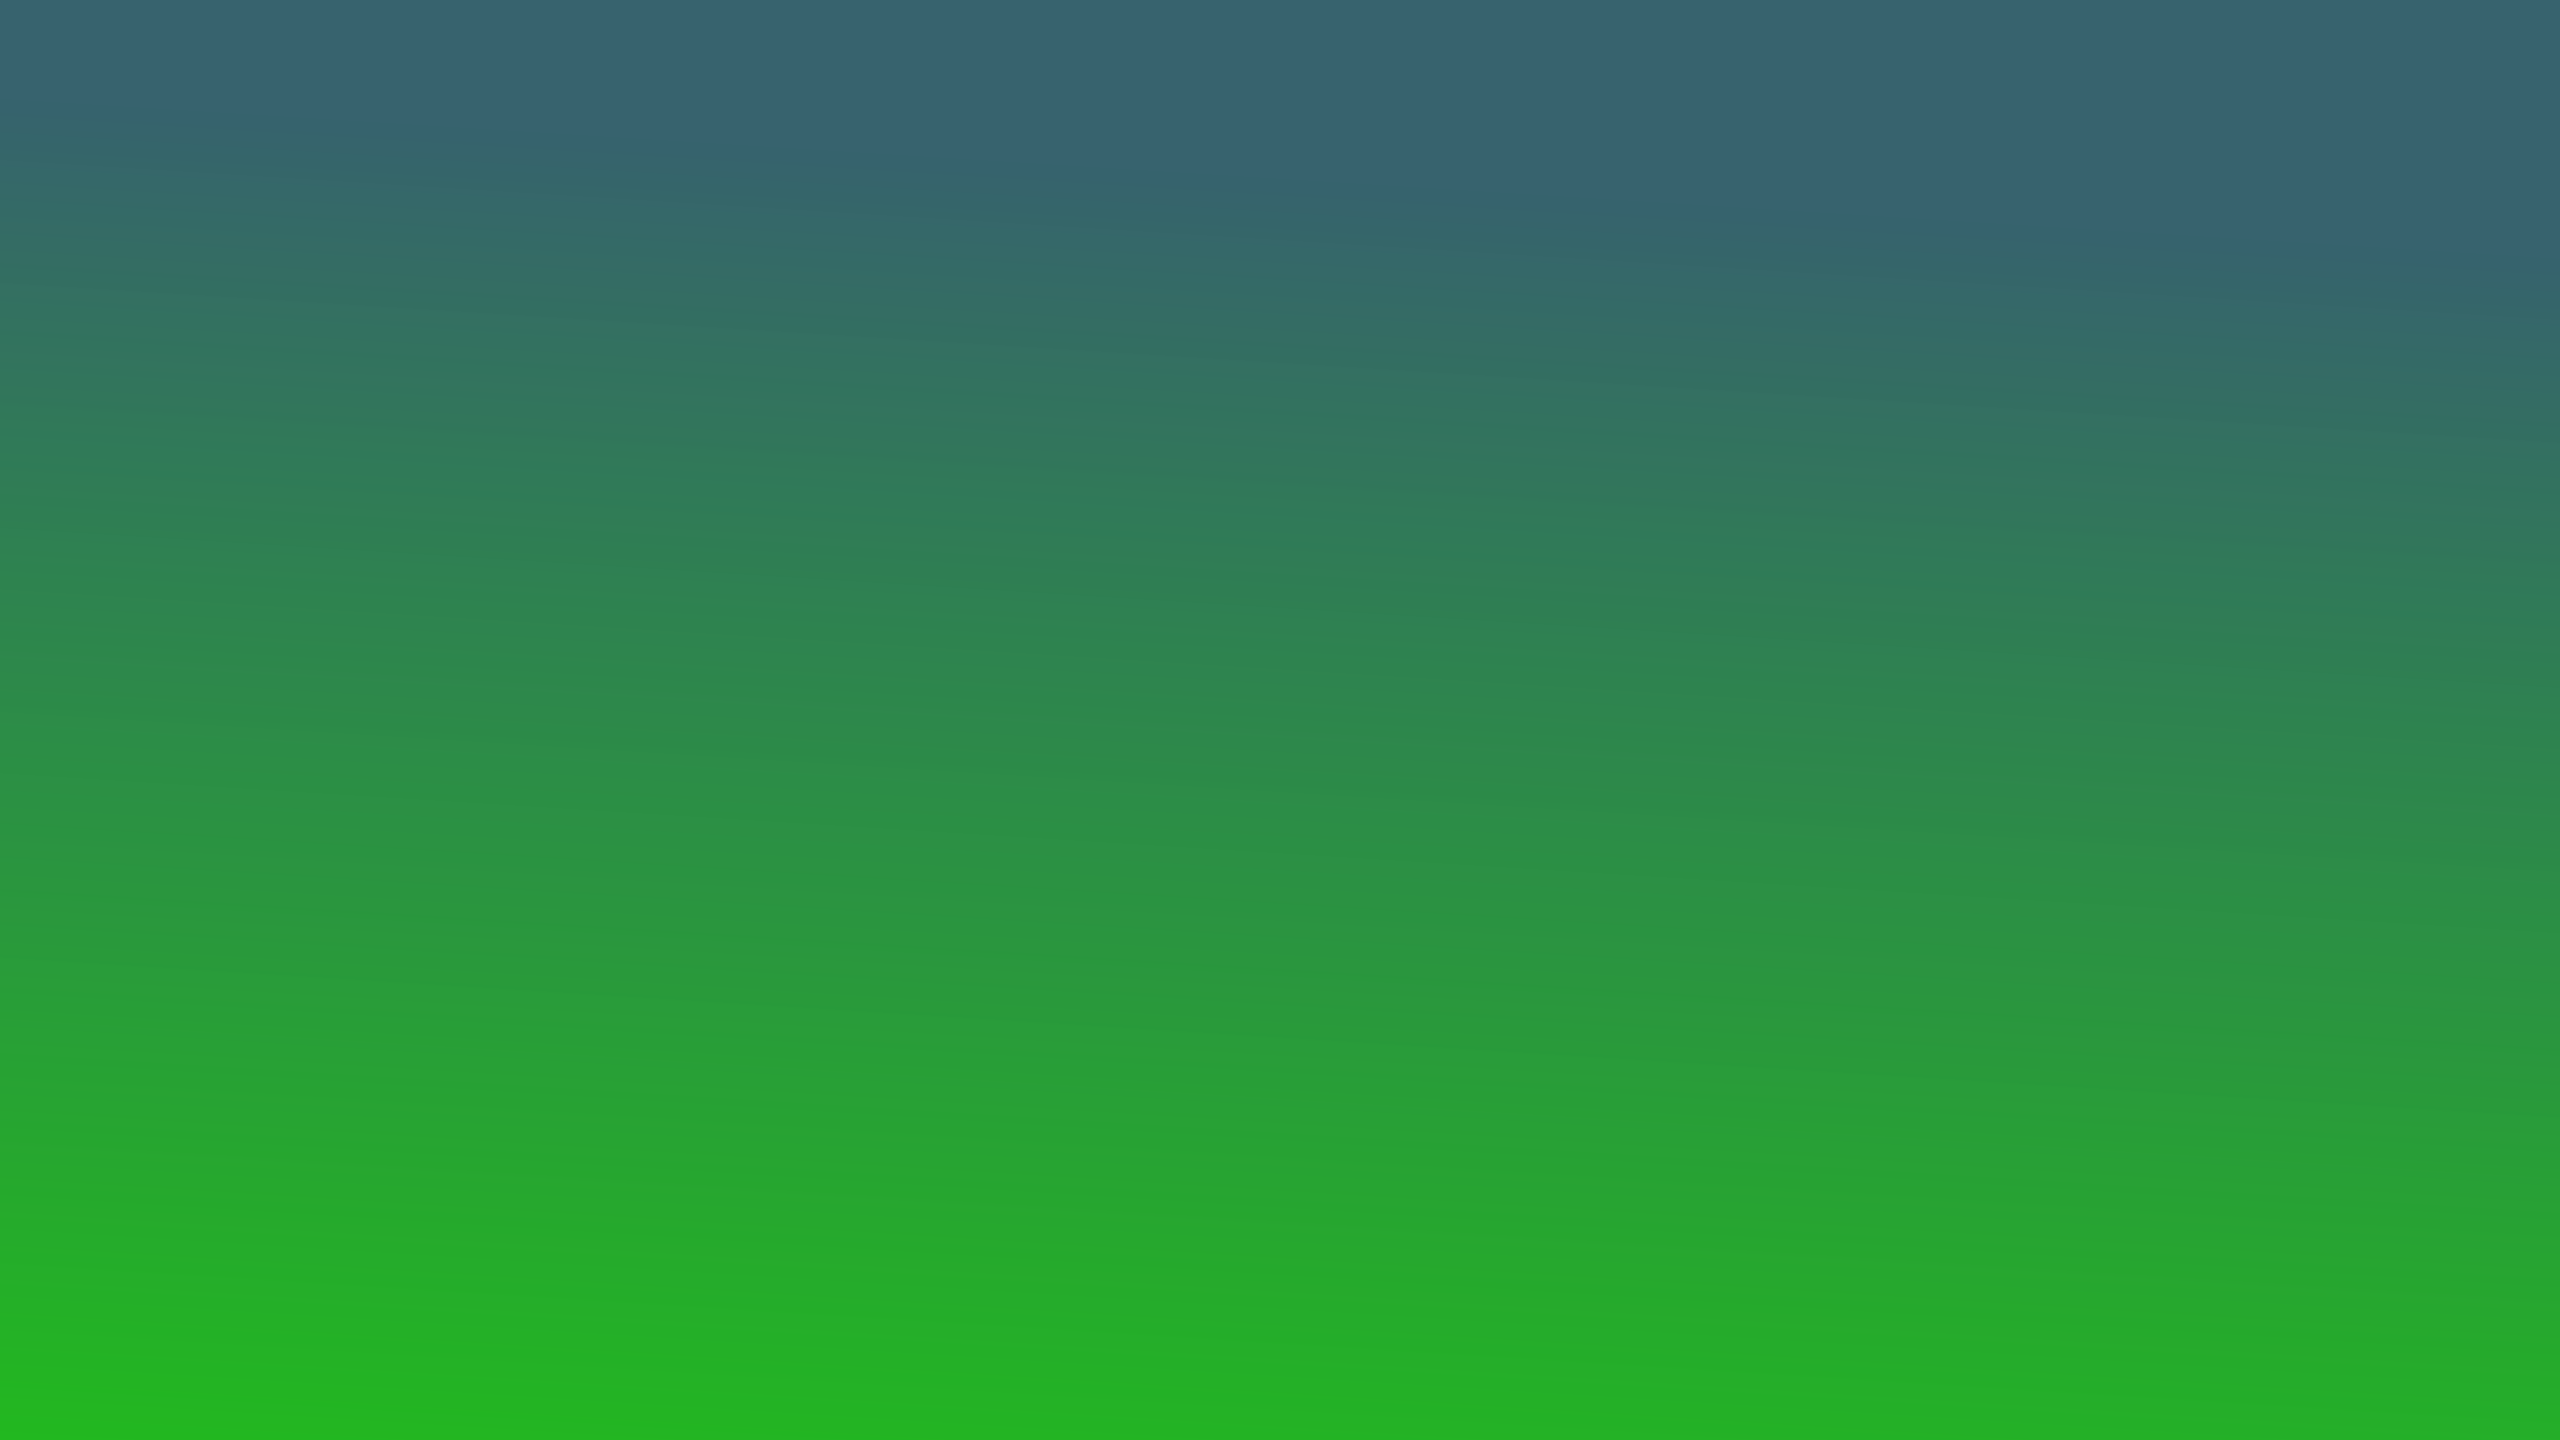 fond d'écran youtube,vert,bleu,turquoise,aqua,herbe